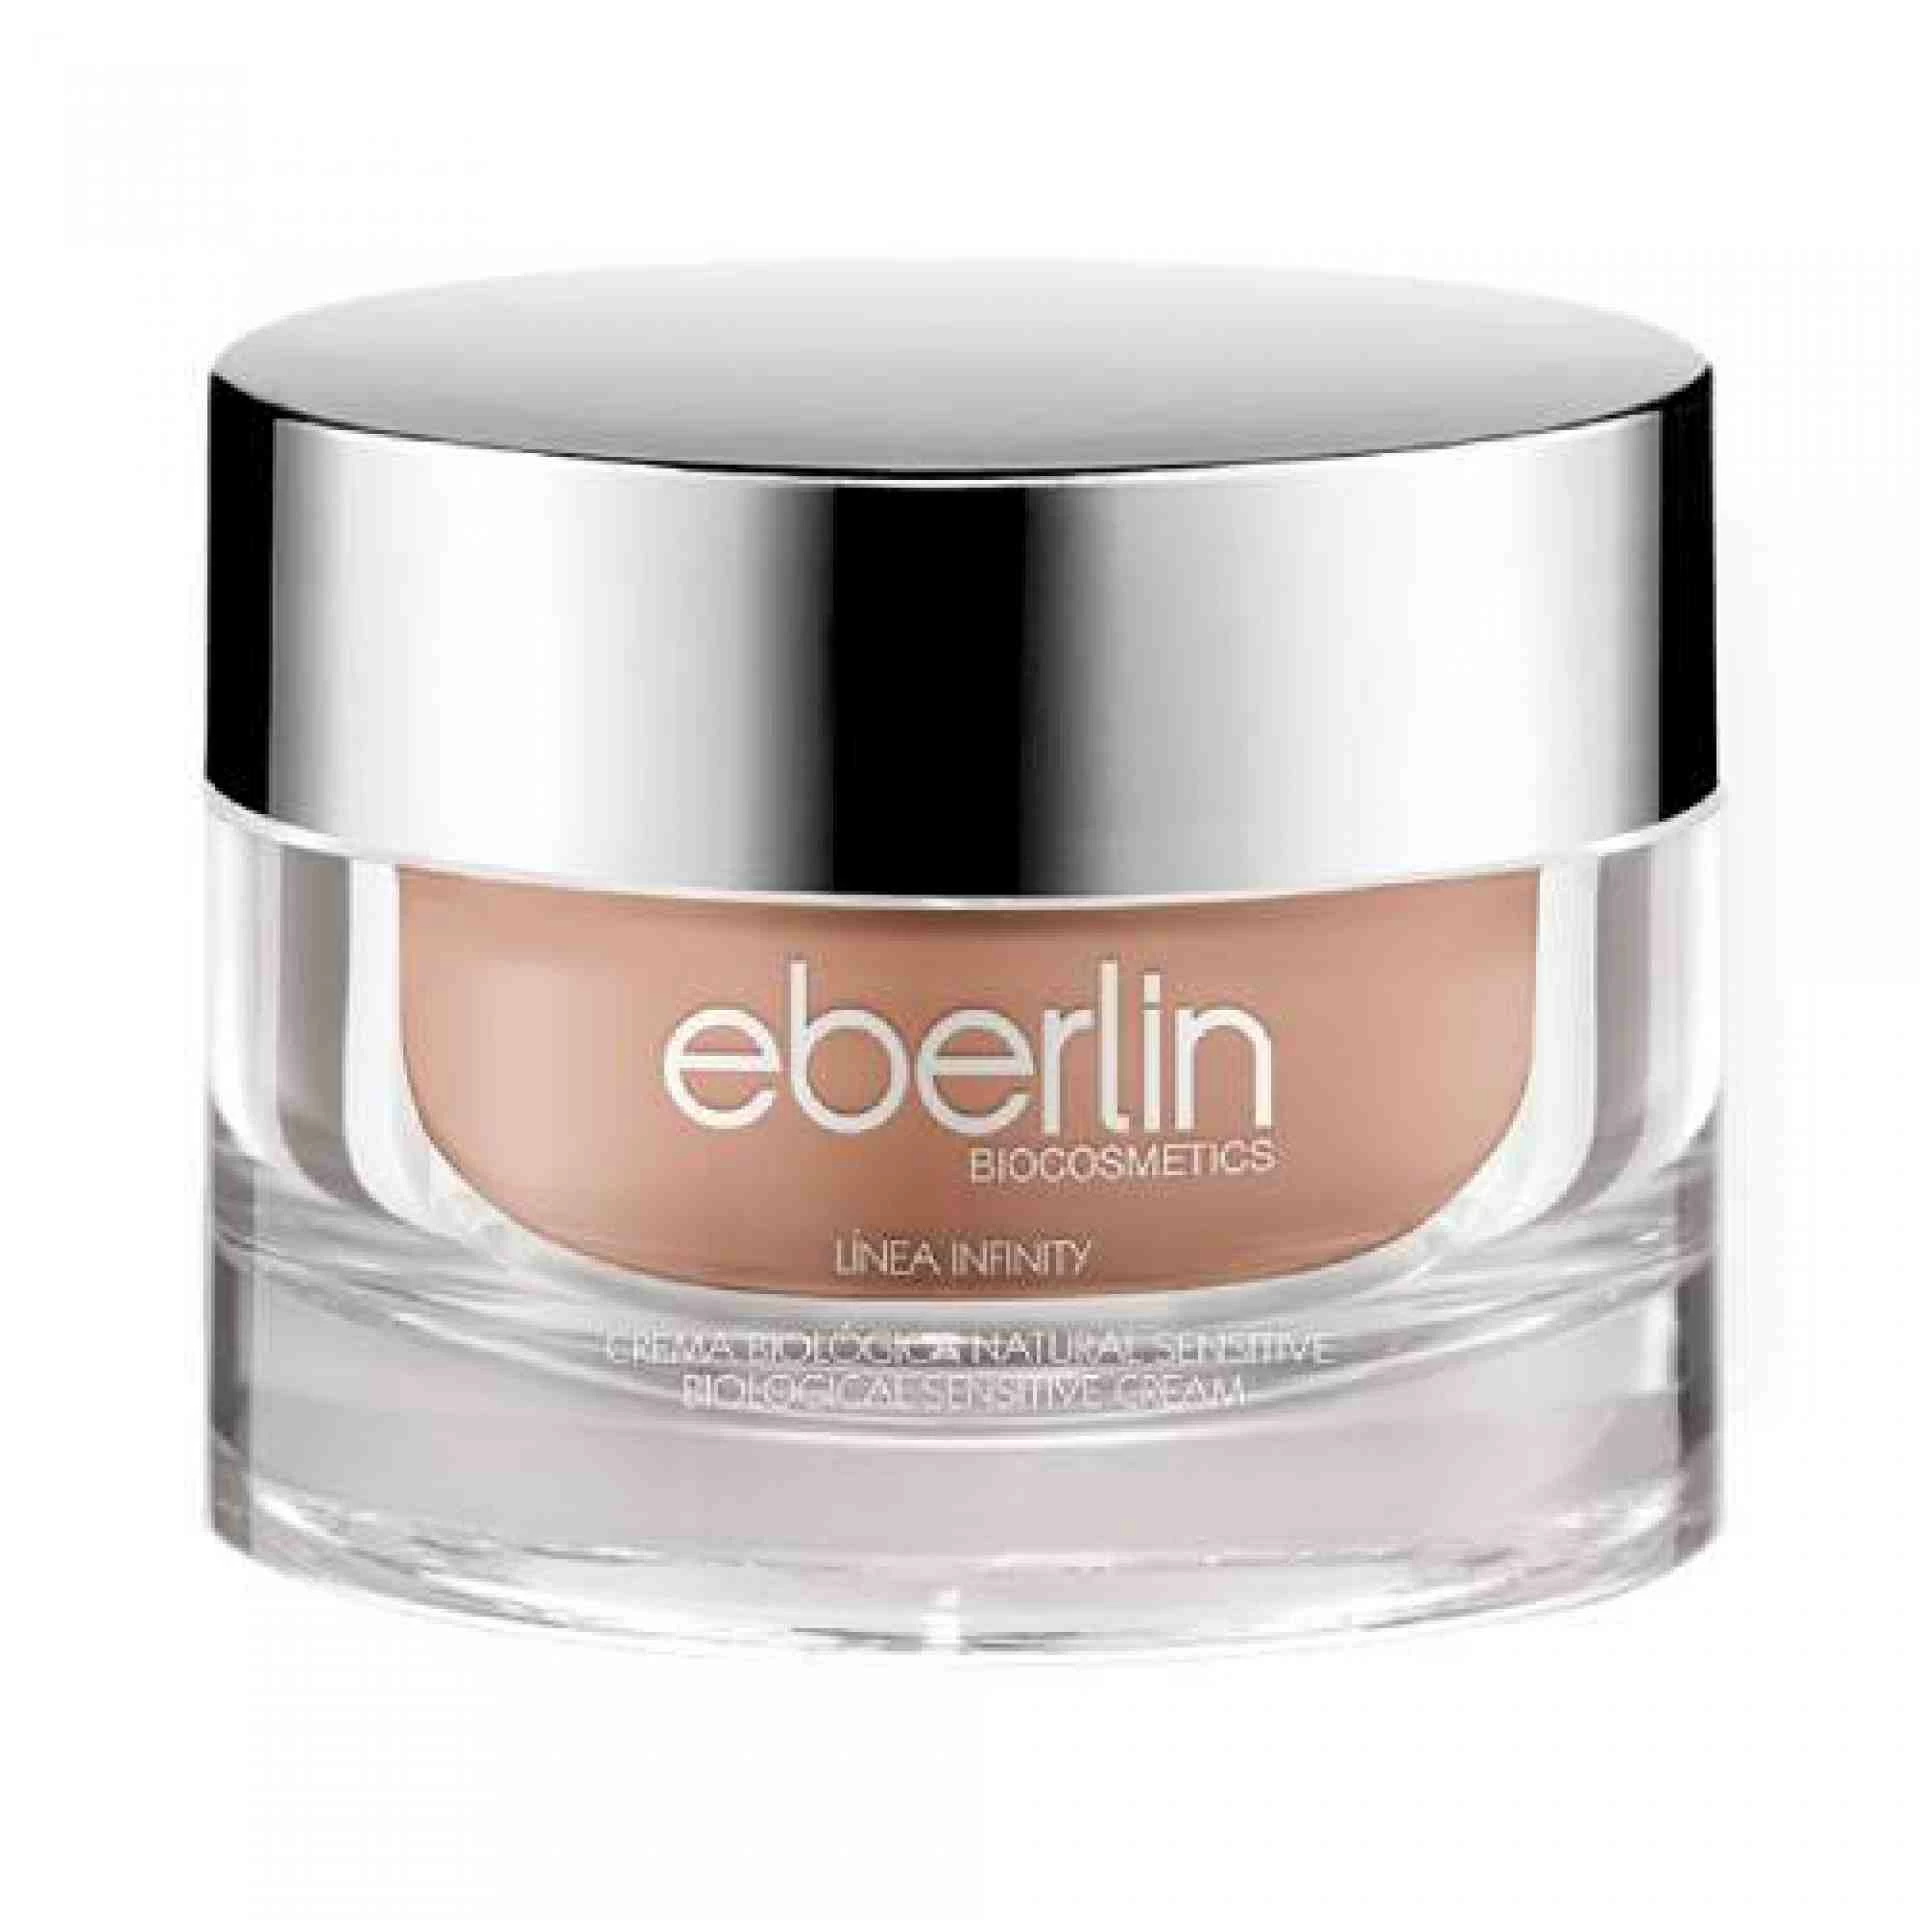 Crema biológica natural Sensitive 50ml - Línea Infinity - Eberlin ®